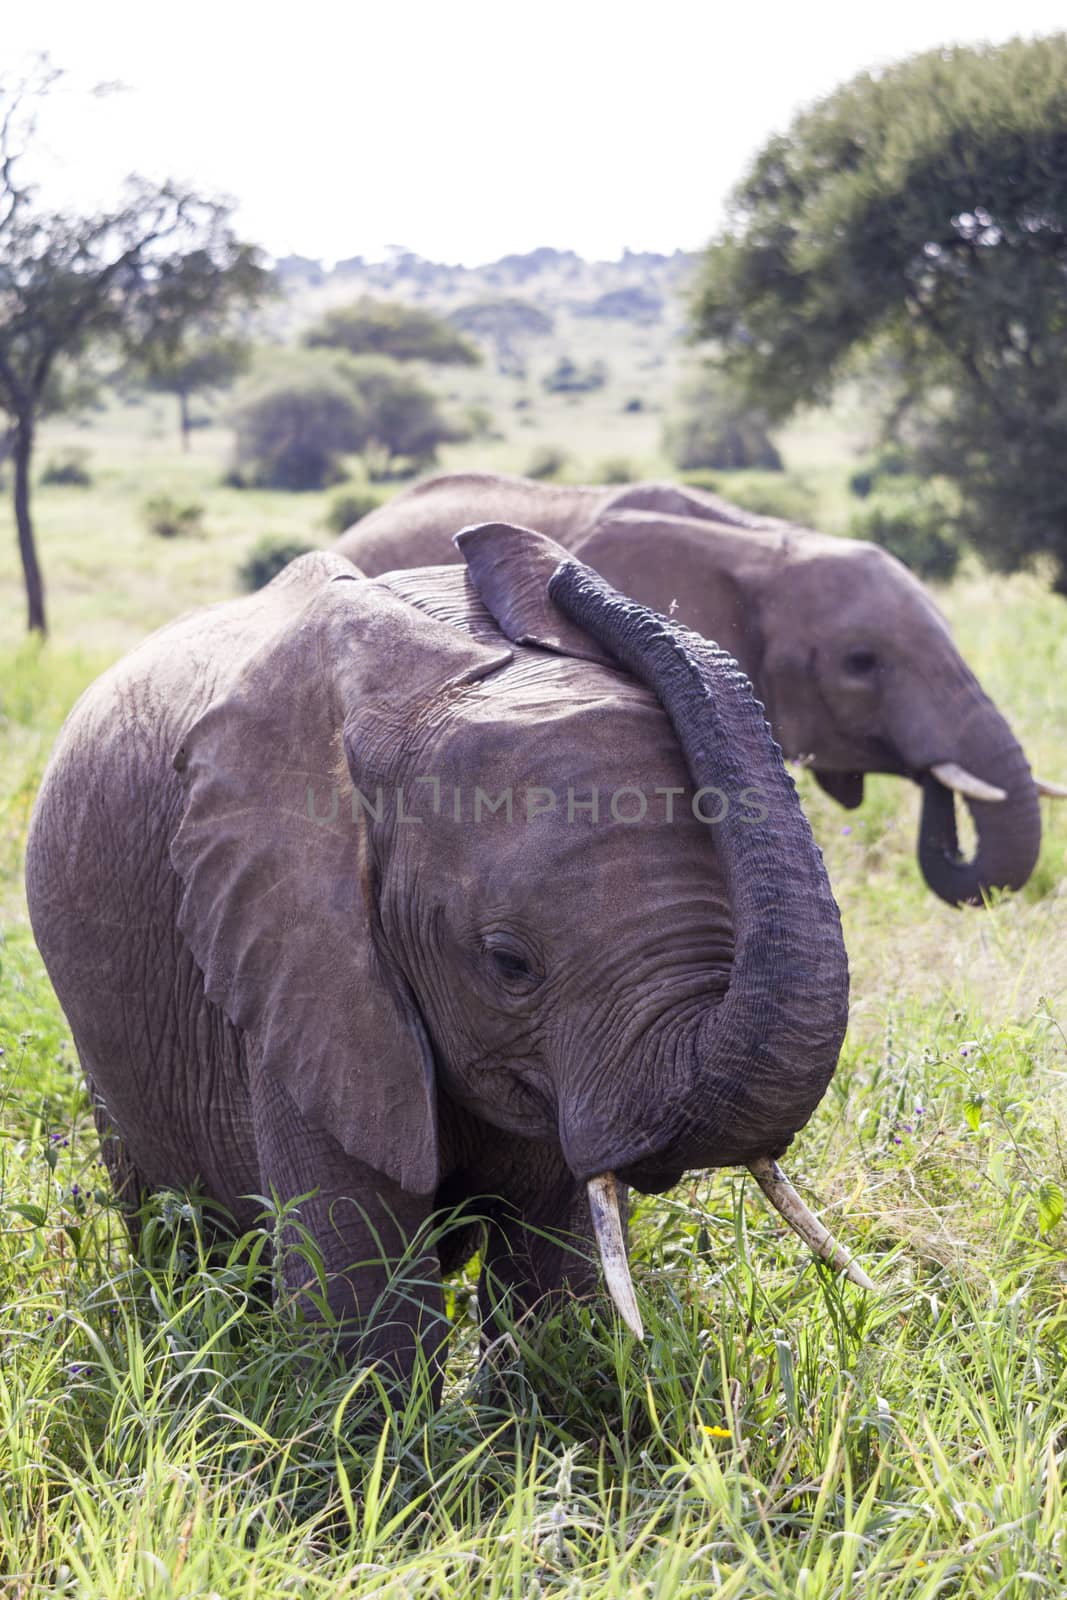 Grazing elephants in Tanzania close up